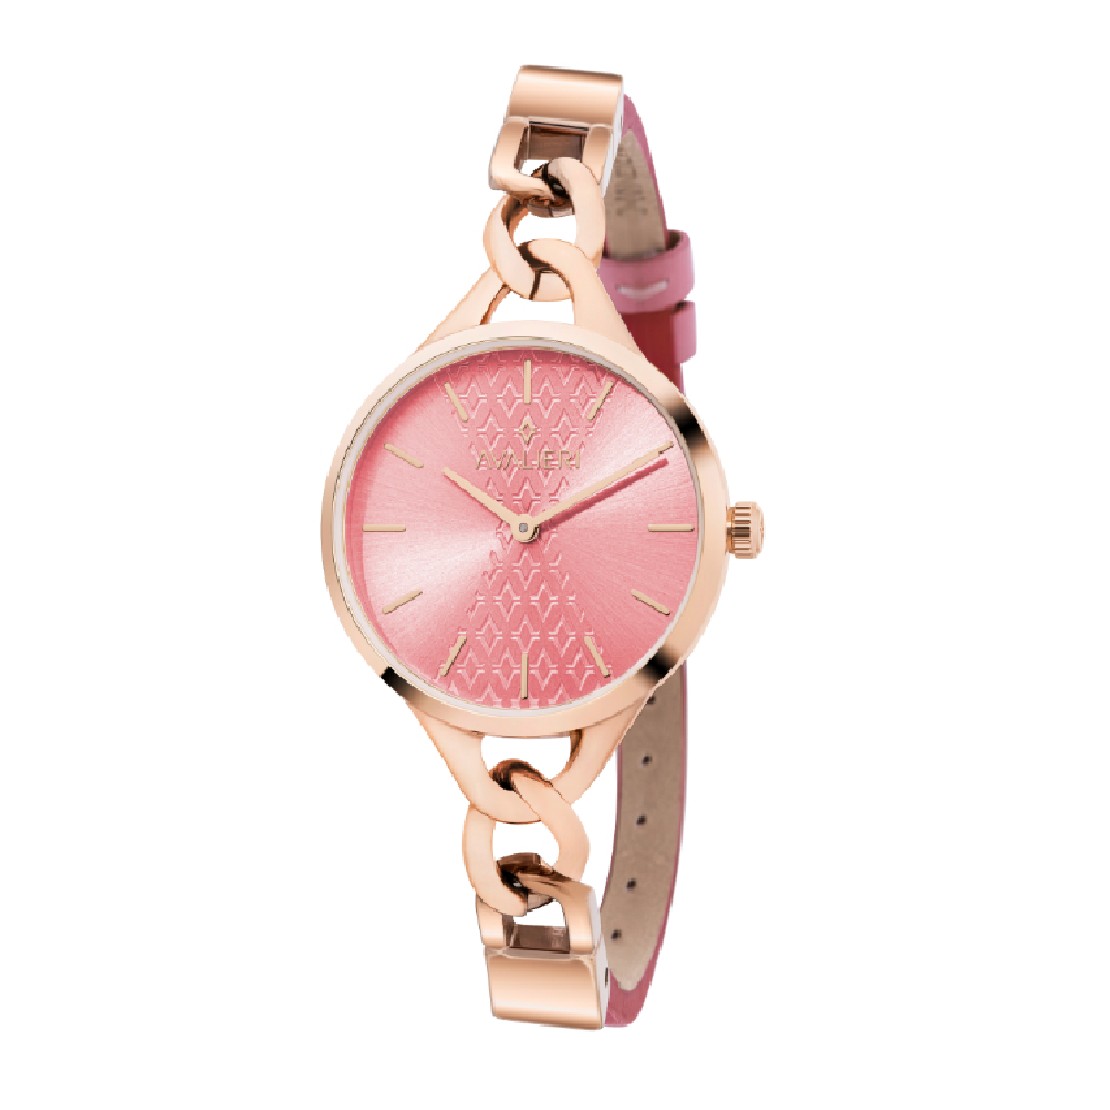 Avalieri Women's Quartz Watch Pink Dial - AV-2328B